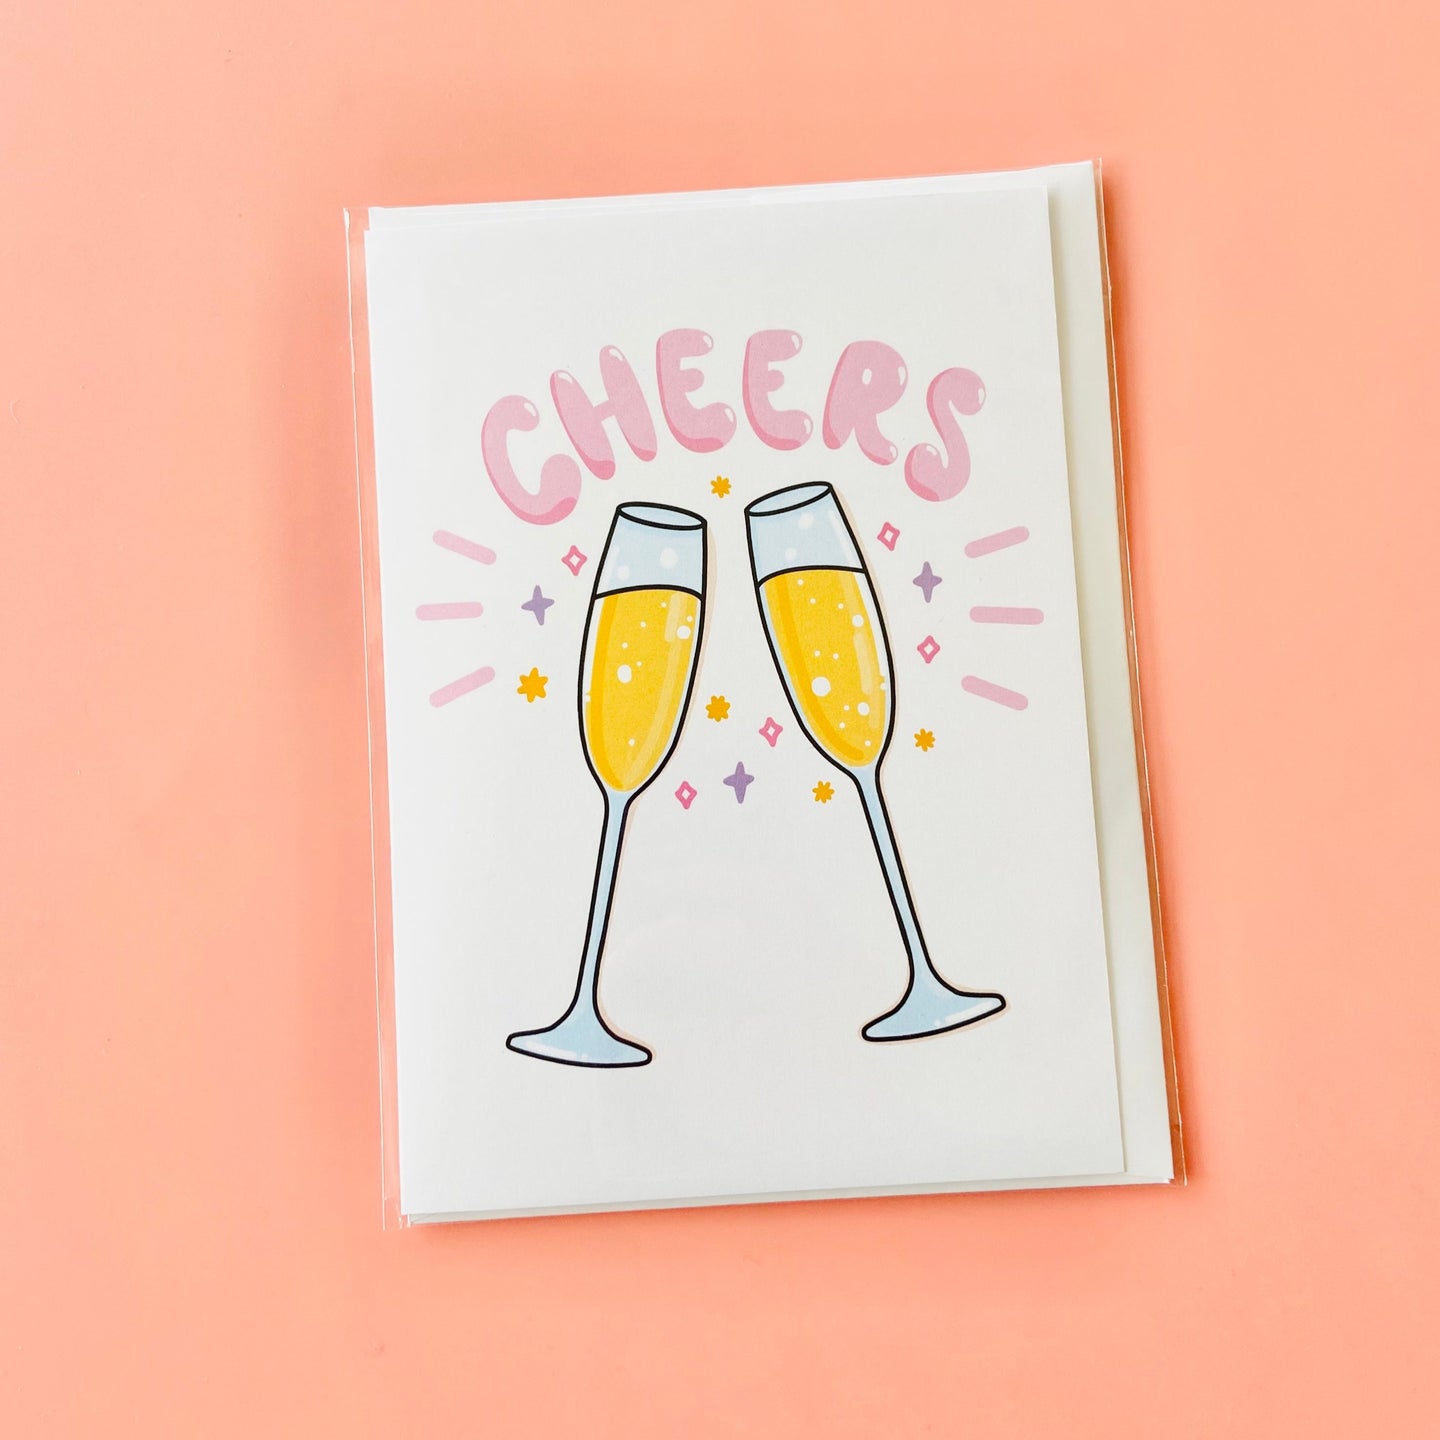 Cheers - Greeting card